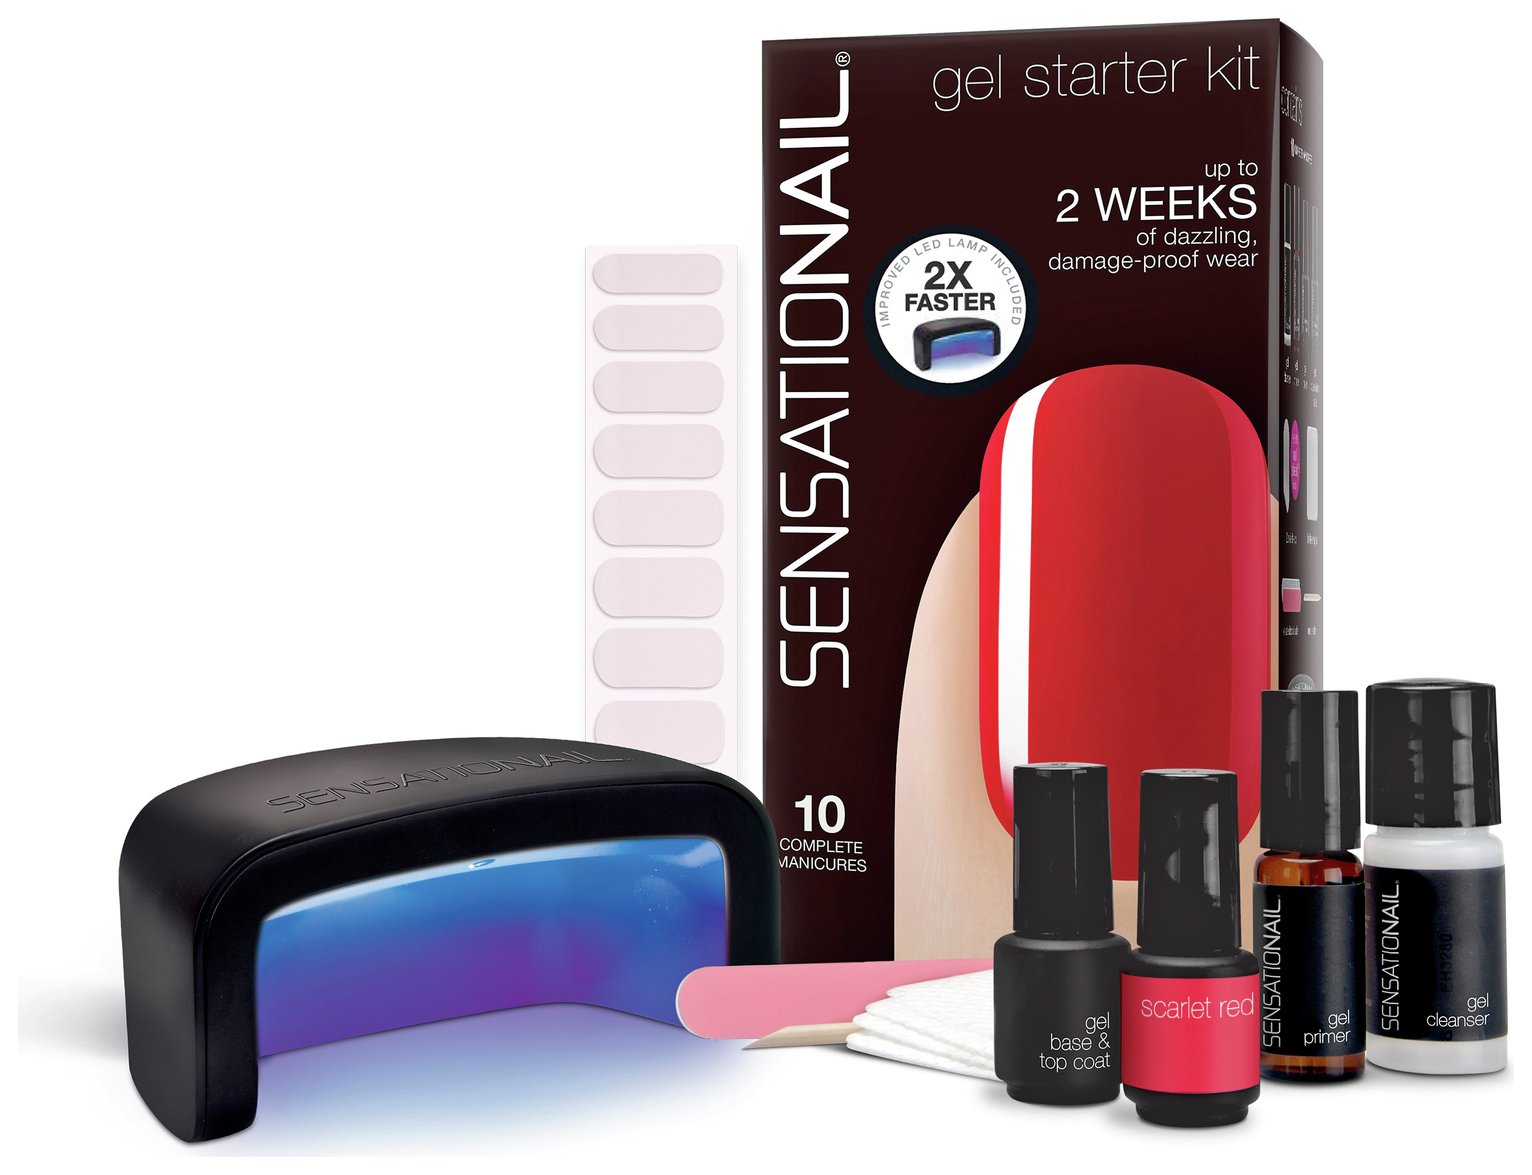 SensatioNail Scarlet Red Gel Starter Kit review